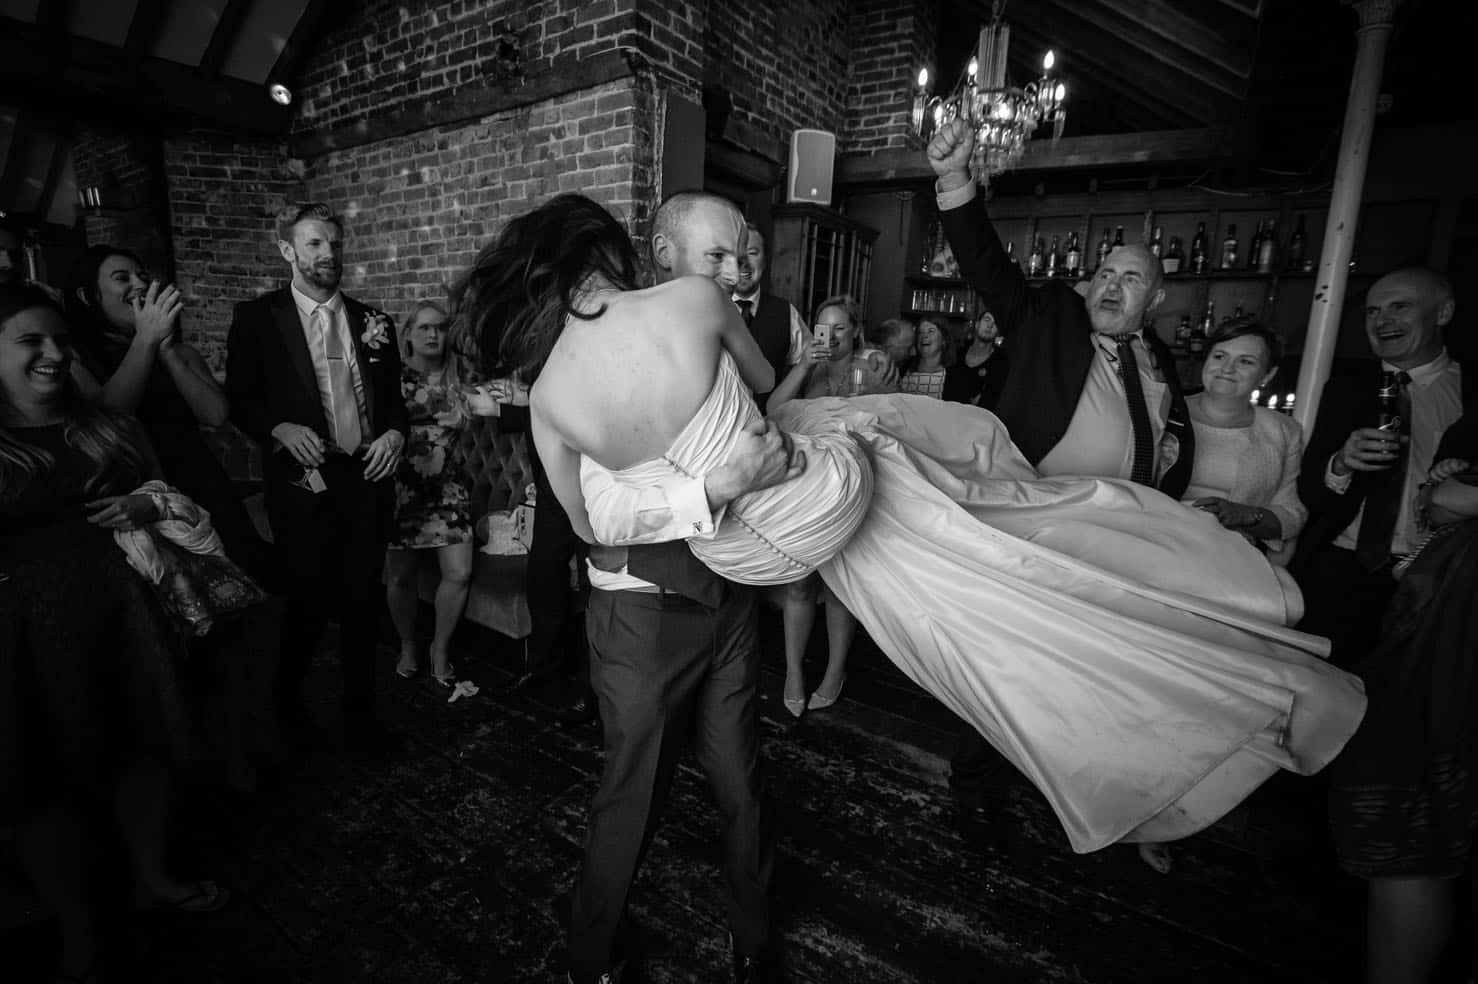 Groom lifting bride during dancing at wedding